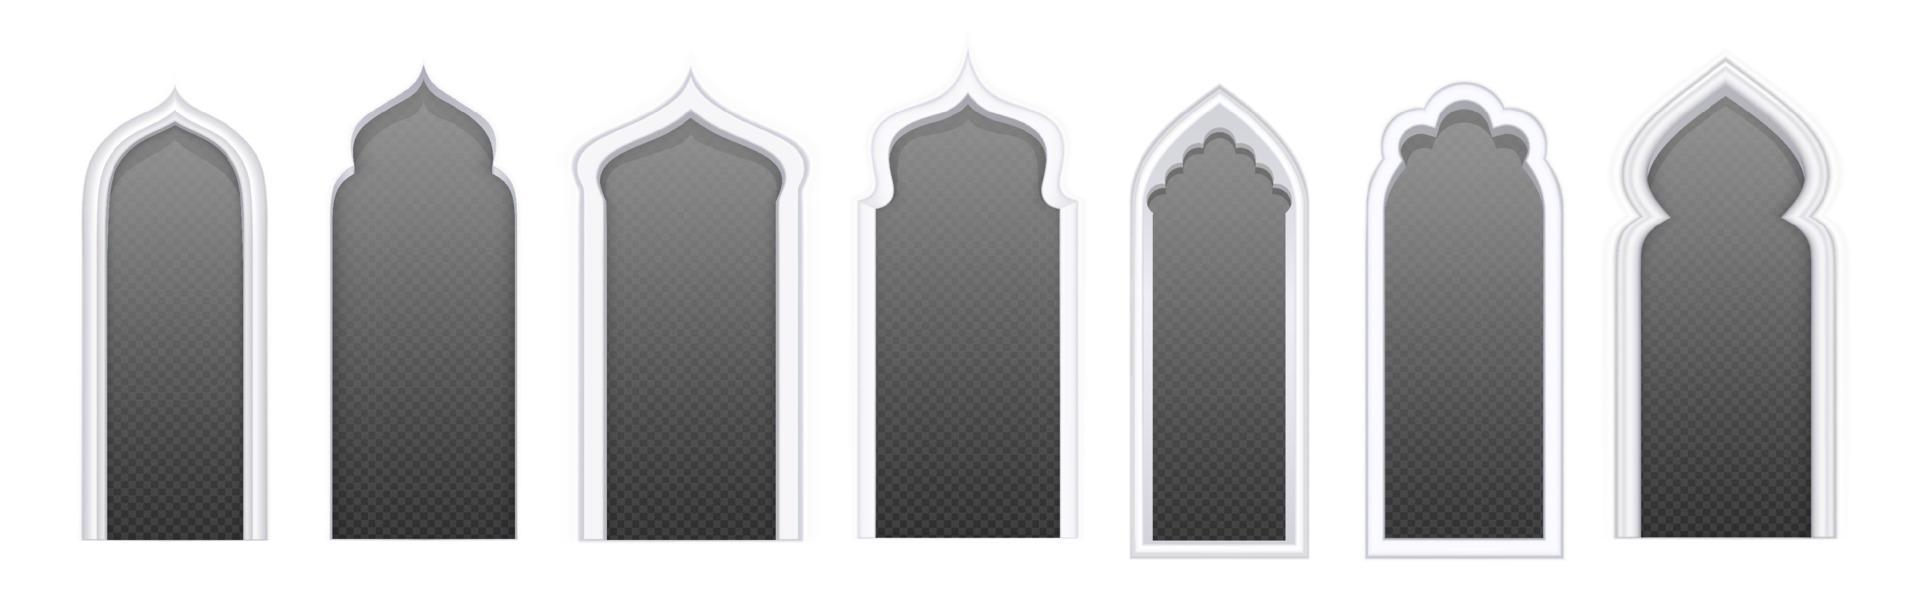 Arab door arches, islamic architecture vector